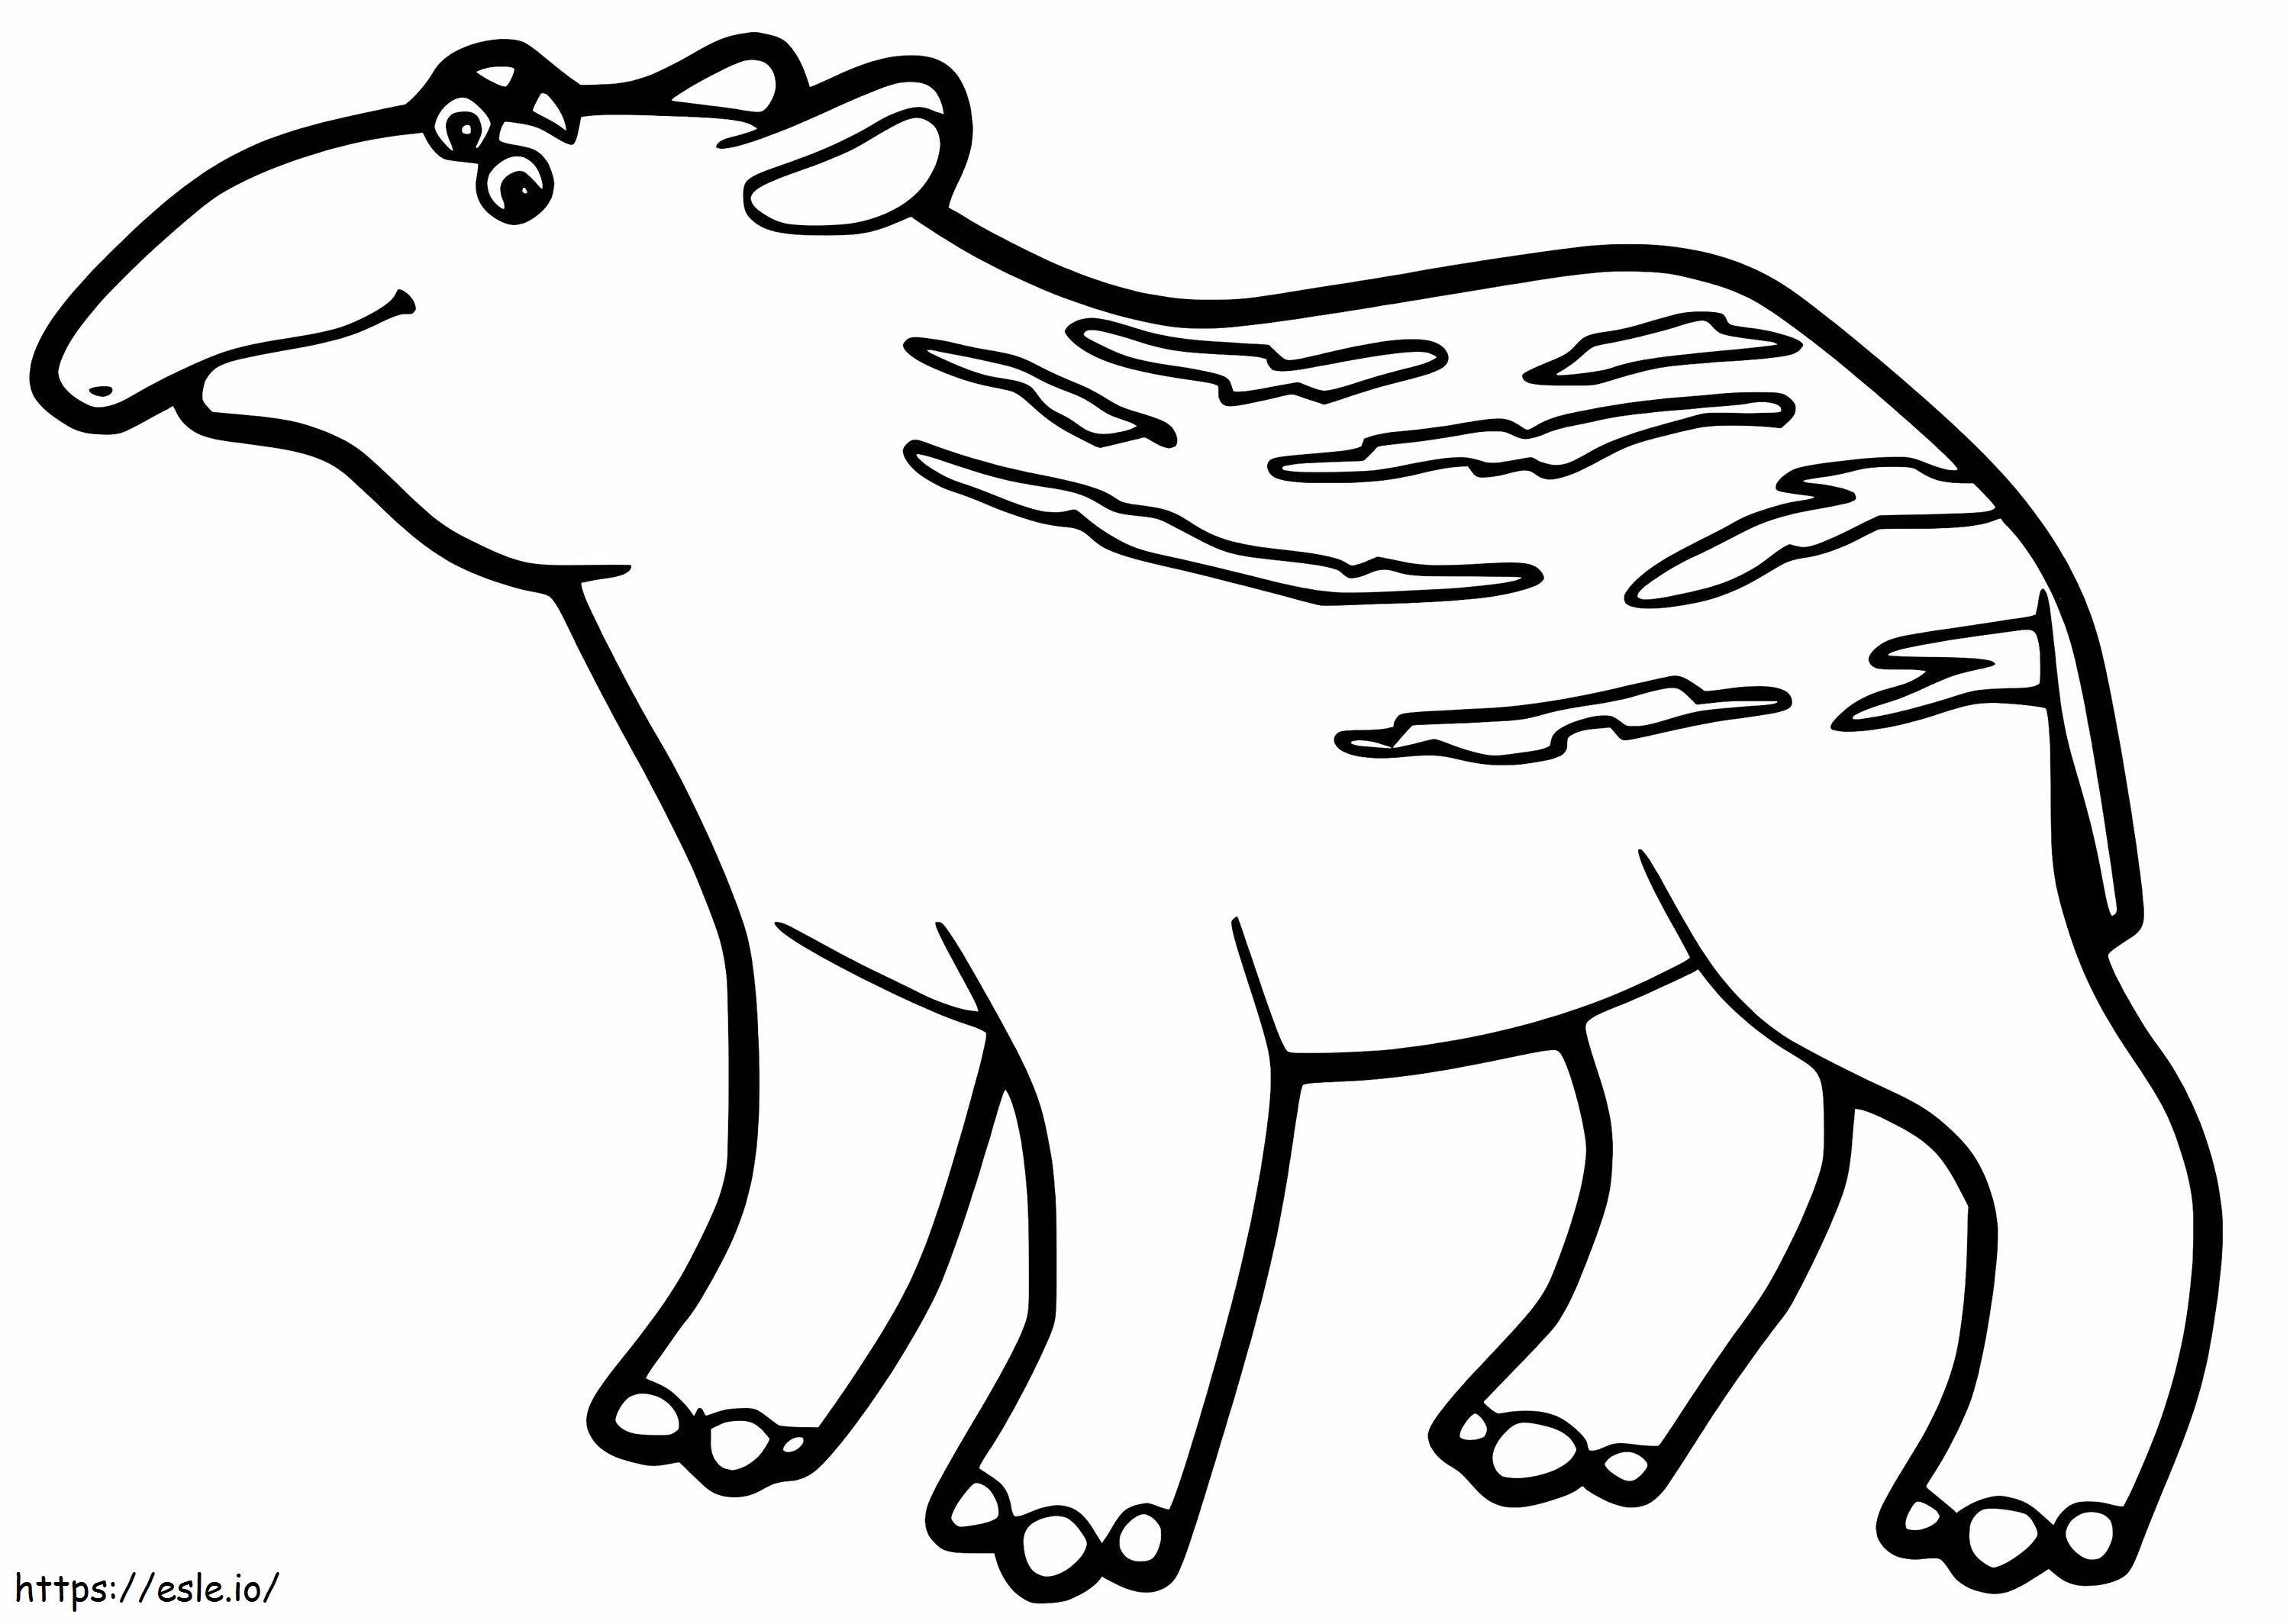 Funny Tapir coloring page